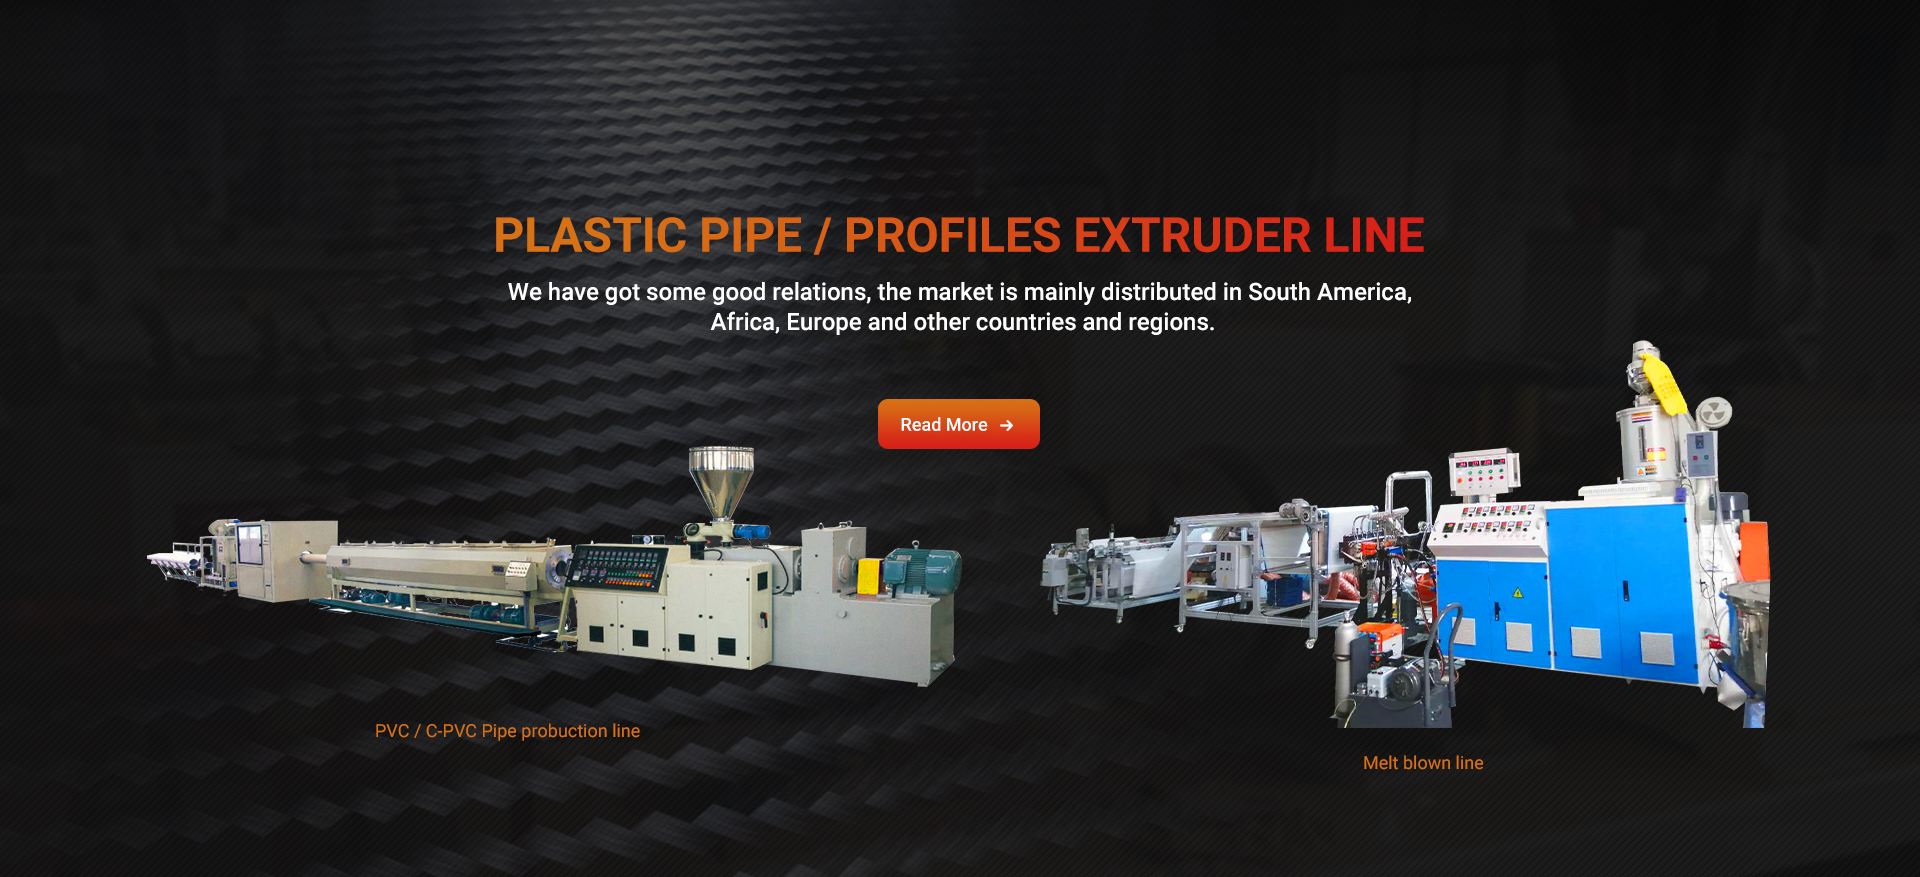 Plastic Pipe / Profiles Extruder Line